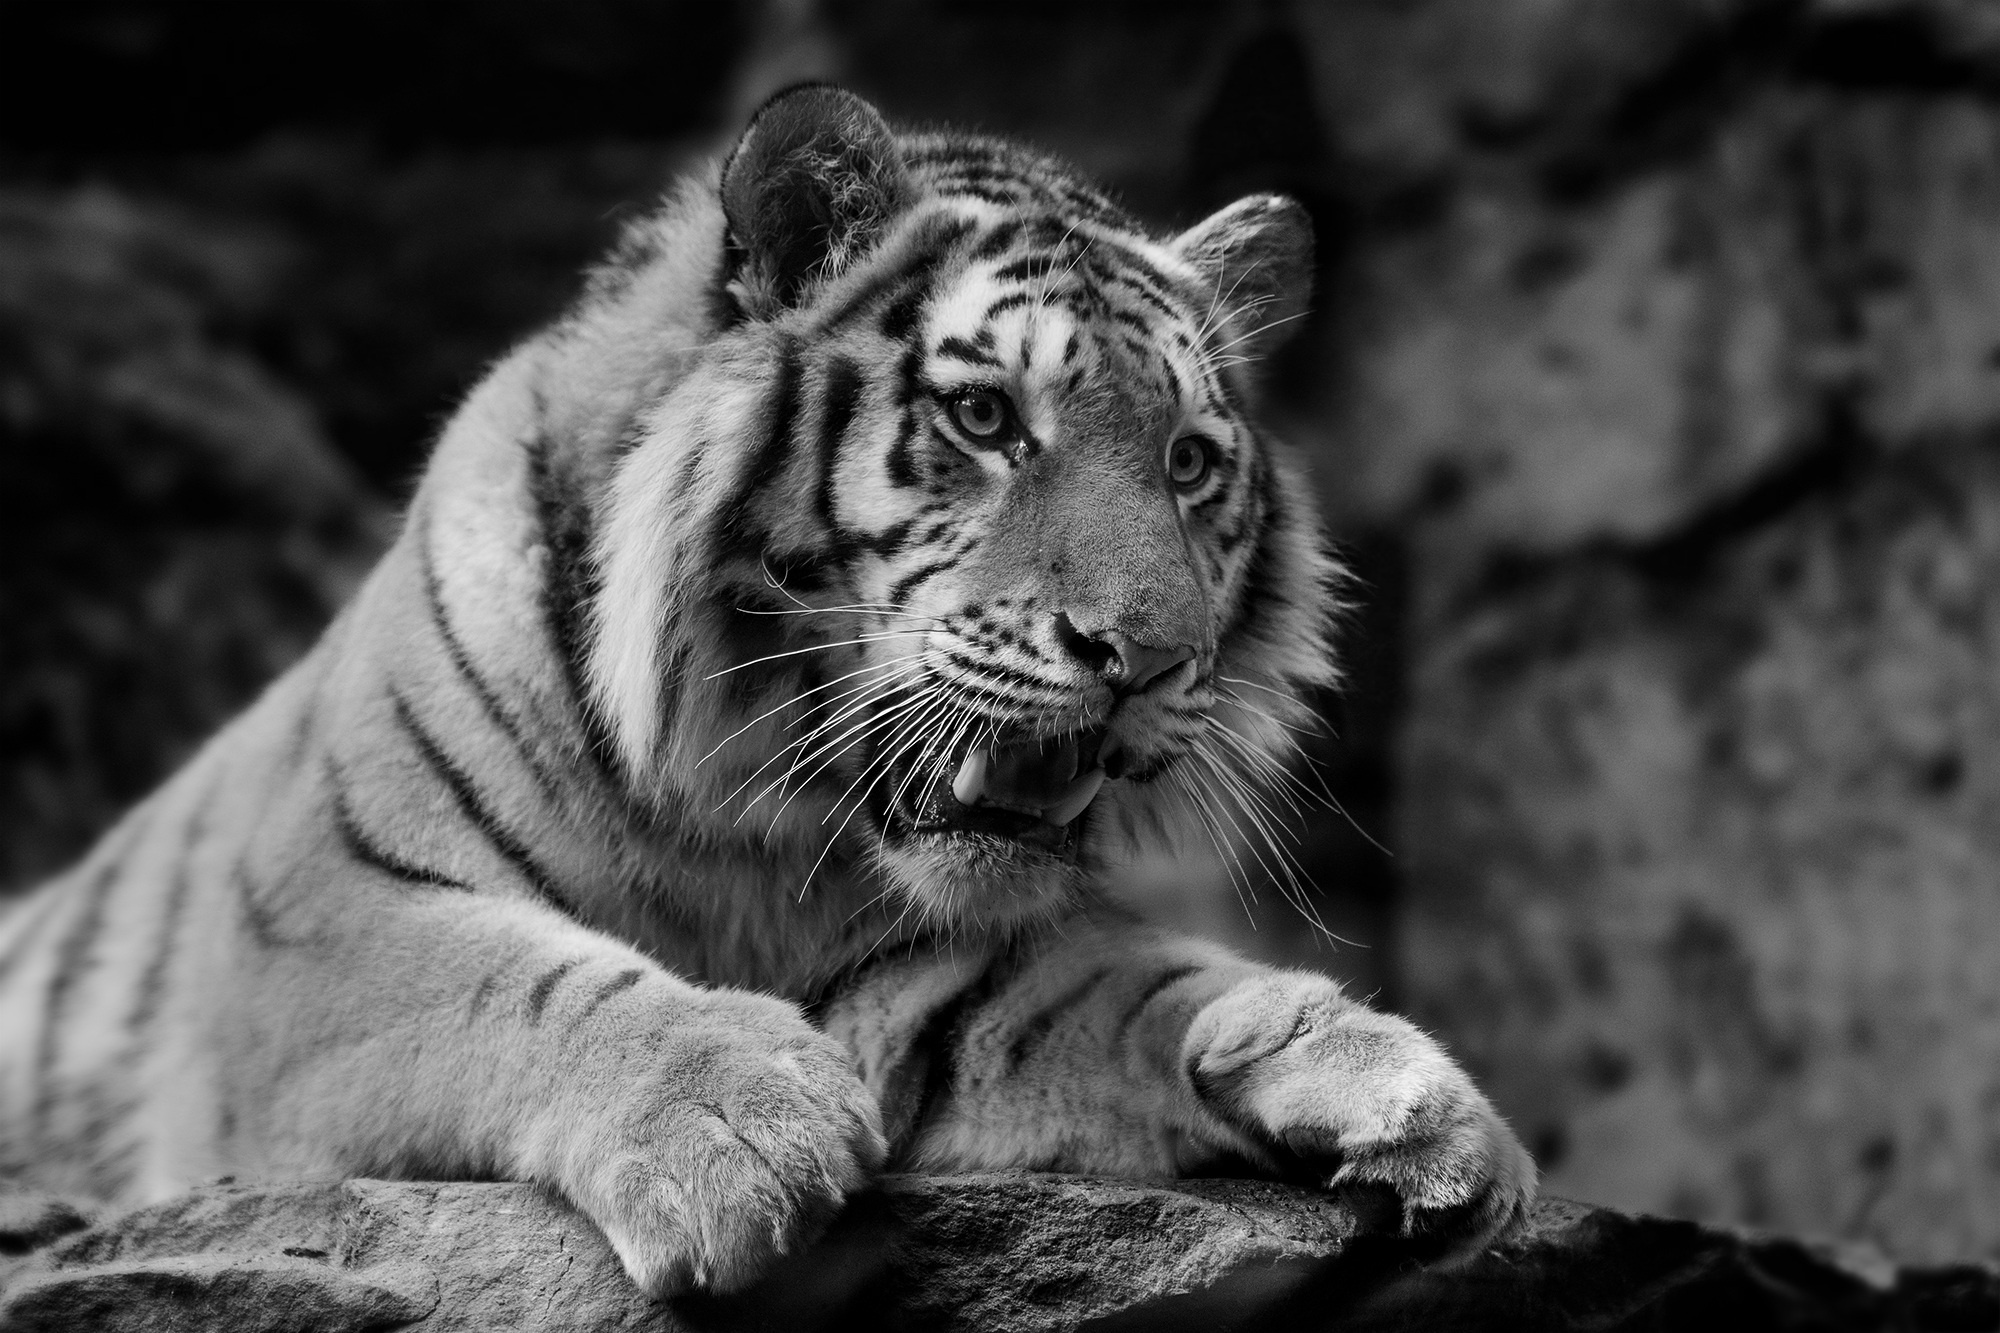 A vicious tiger in a monochrome photo